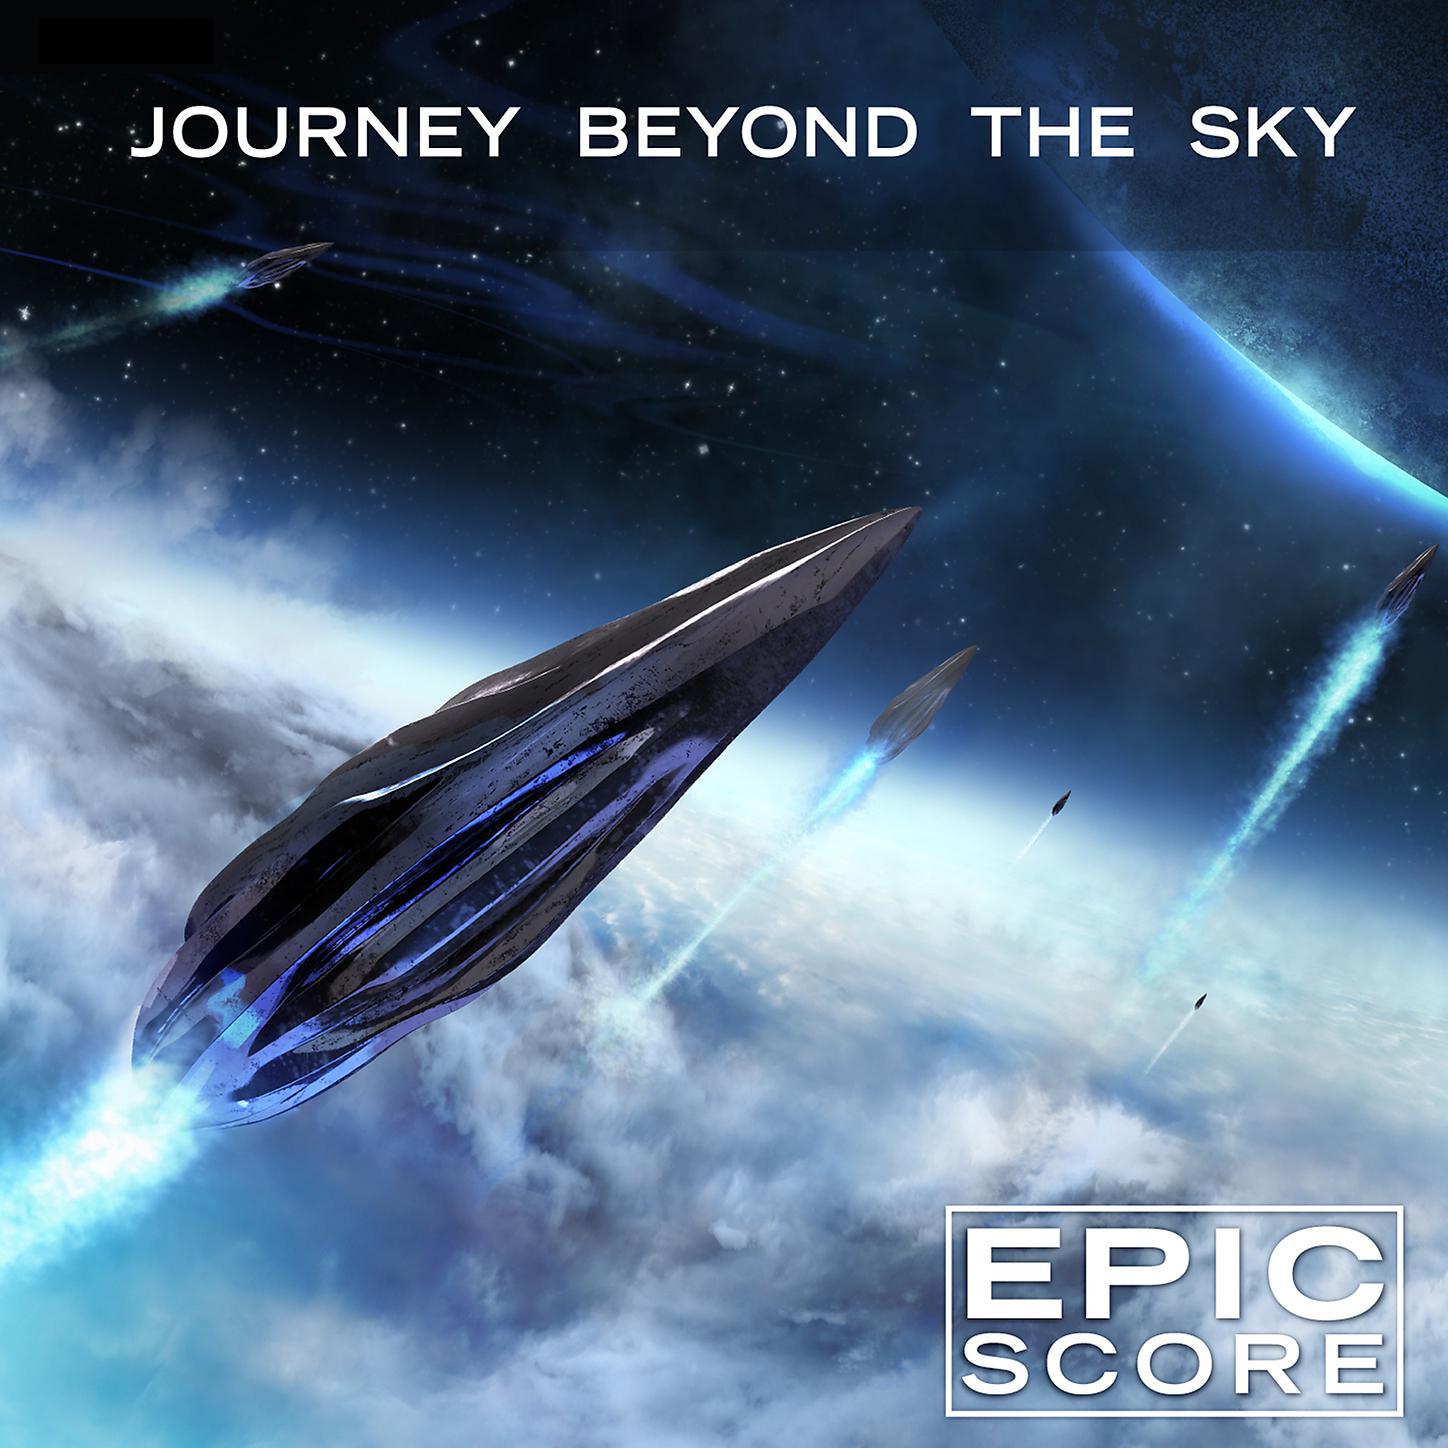 Epic journey. Journey обложки альбомов. Обложка альбома Джорни. The score обложка. Beyond the Skies.